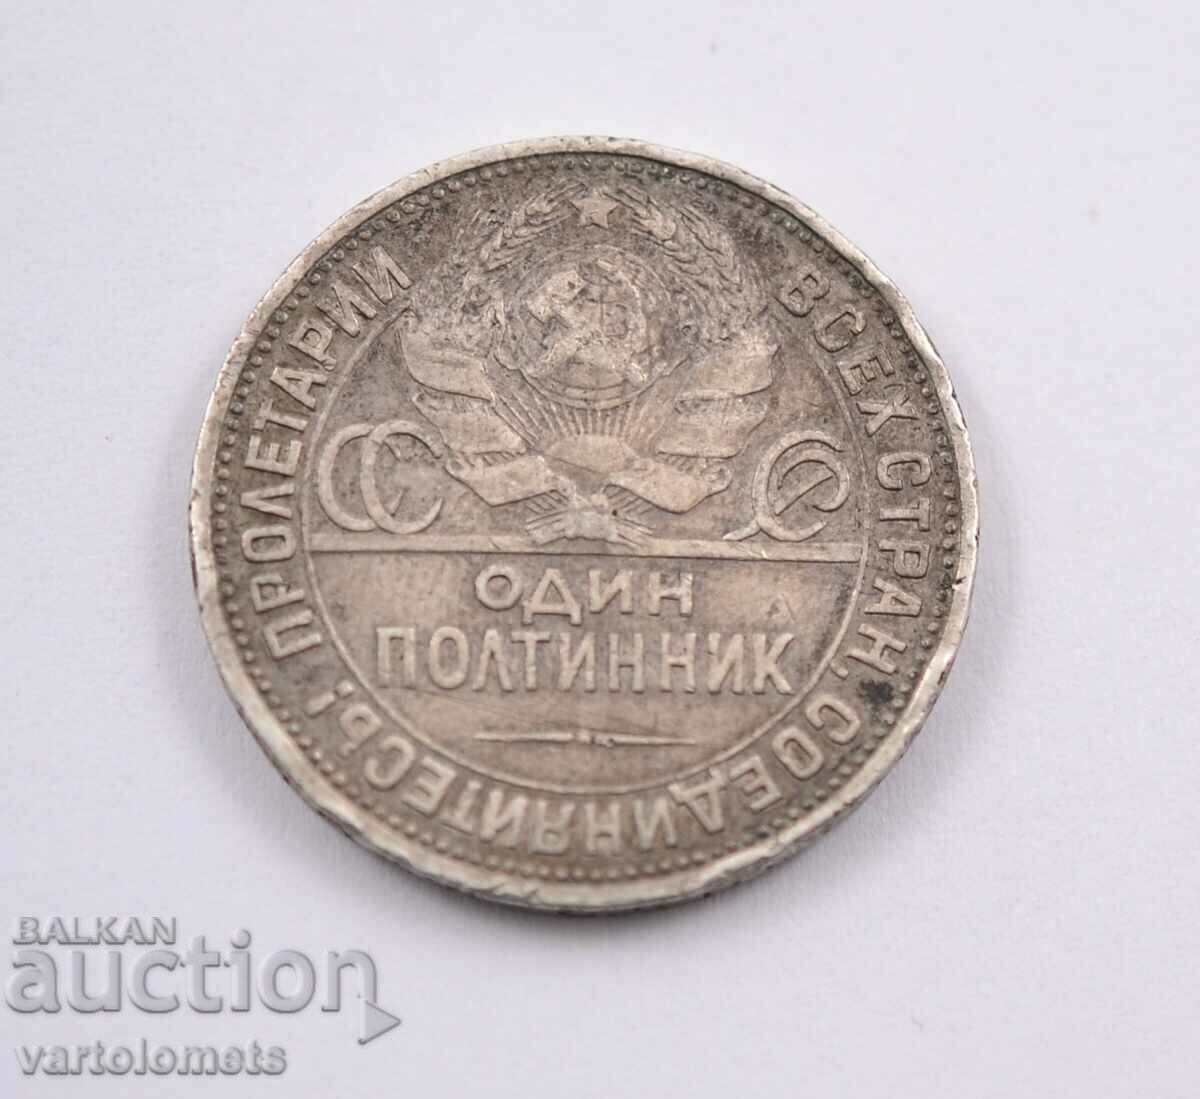 1 poltinnik silver - 1924 - USSR Soviet Union